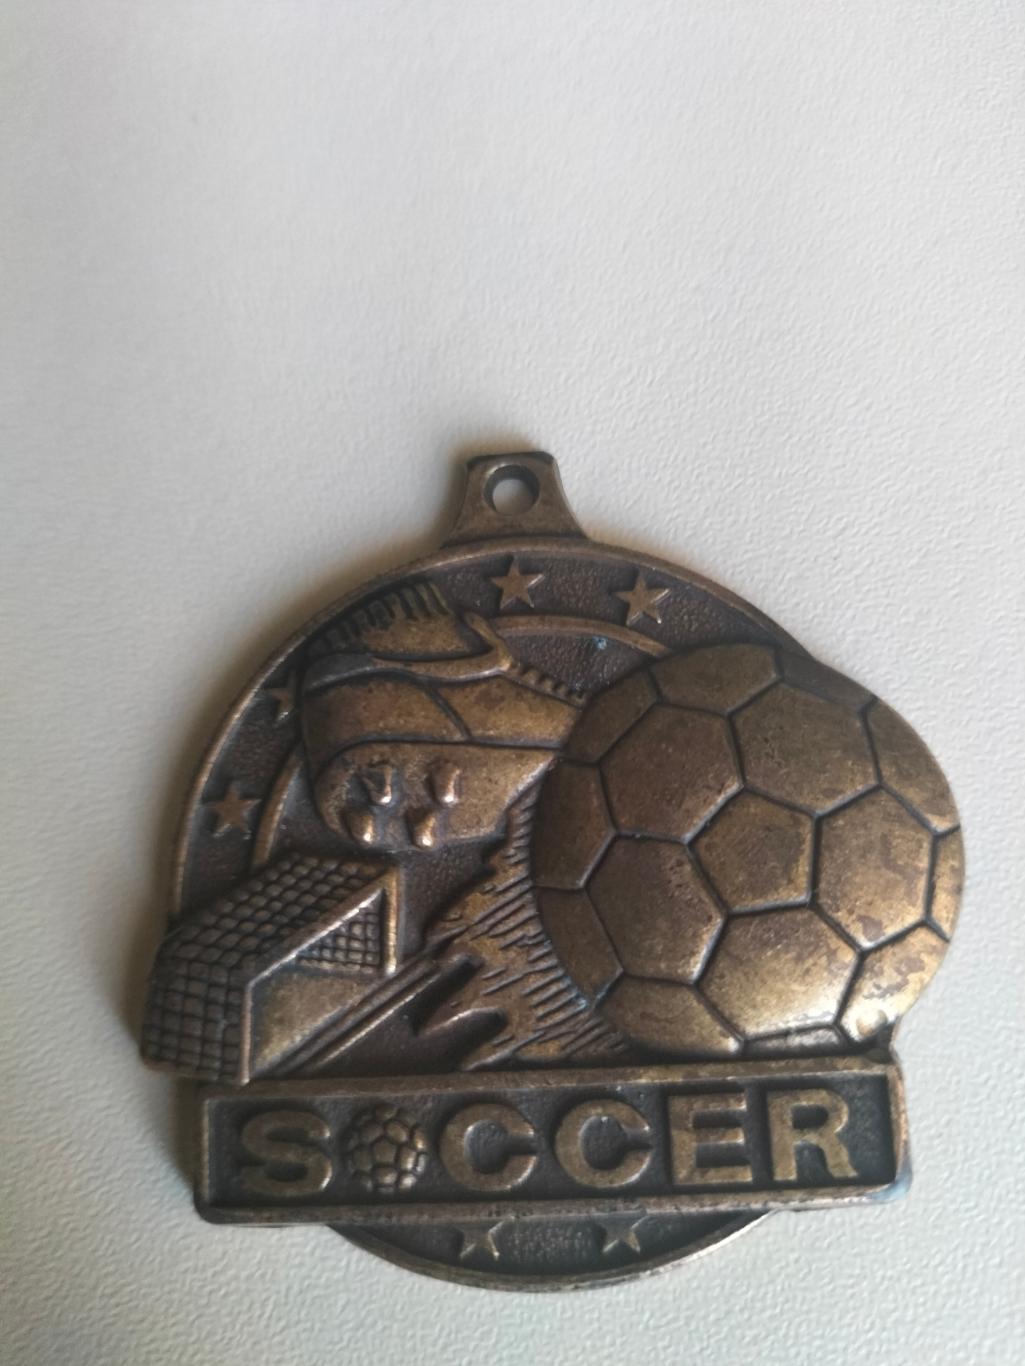 Soccer (медаль)